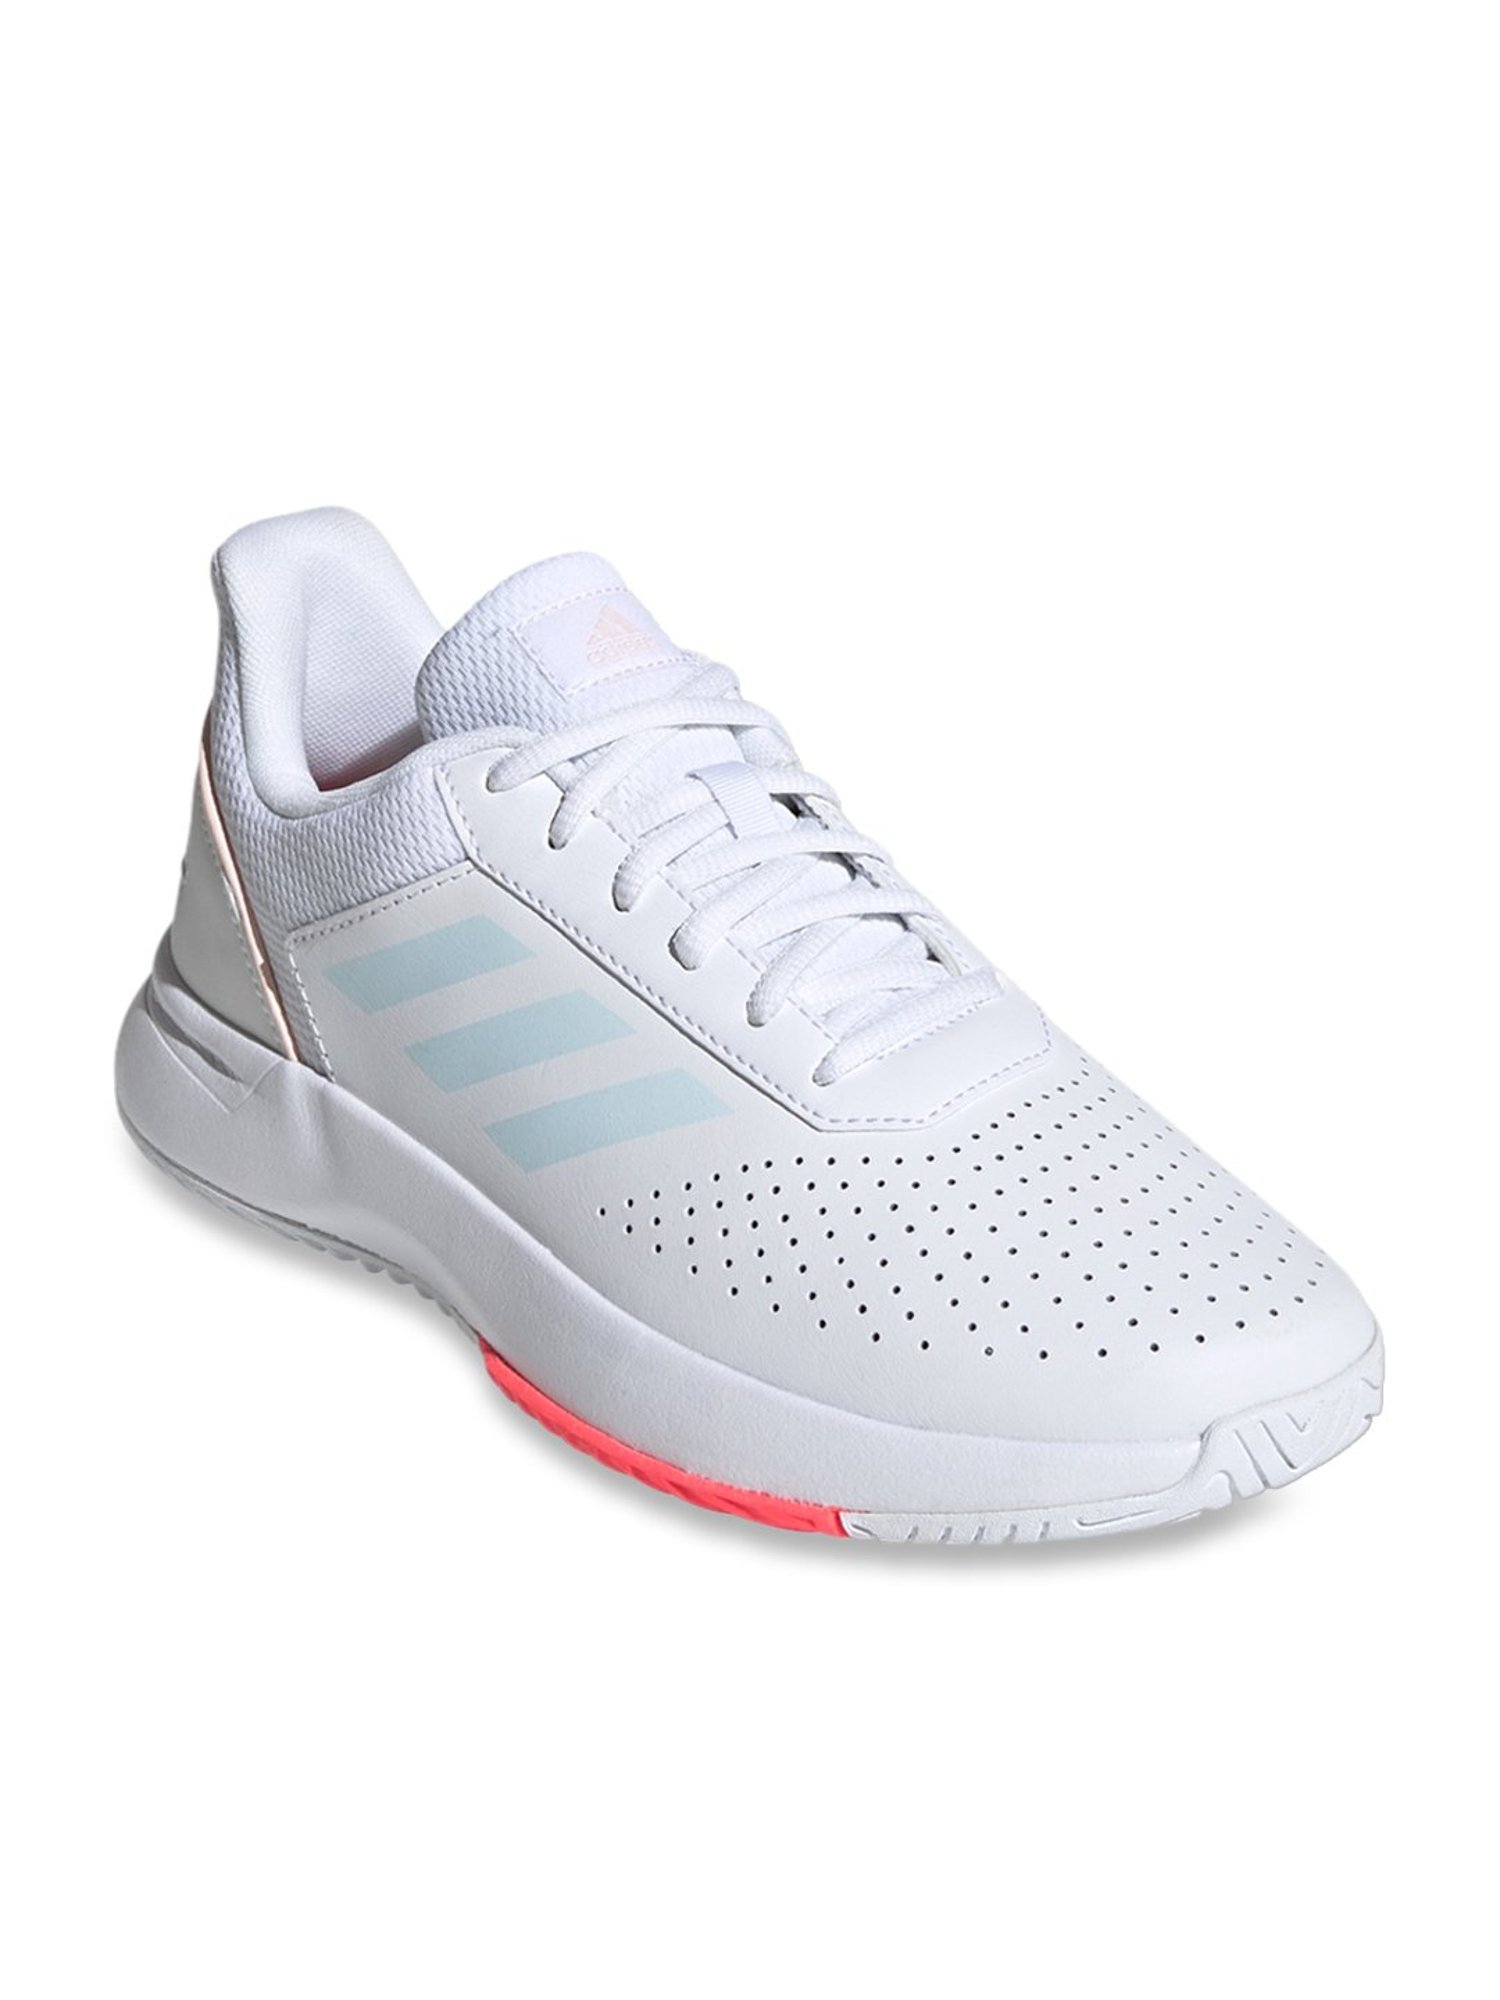 adidas white court shoes